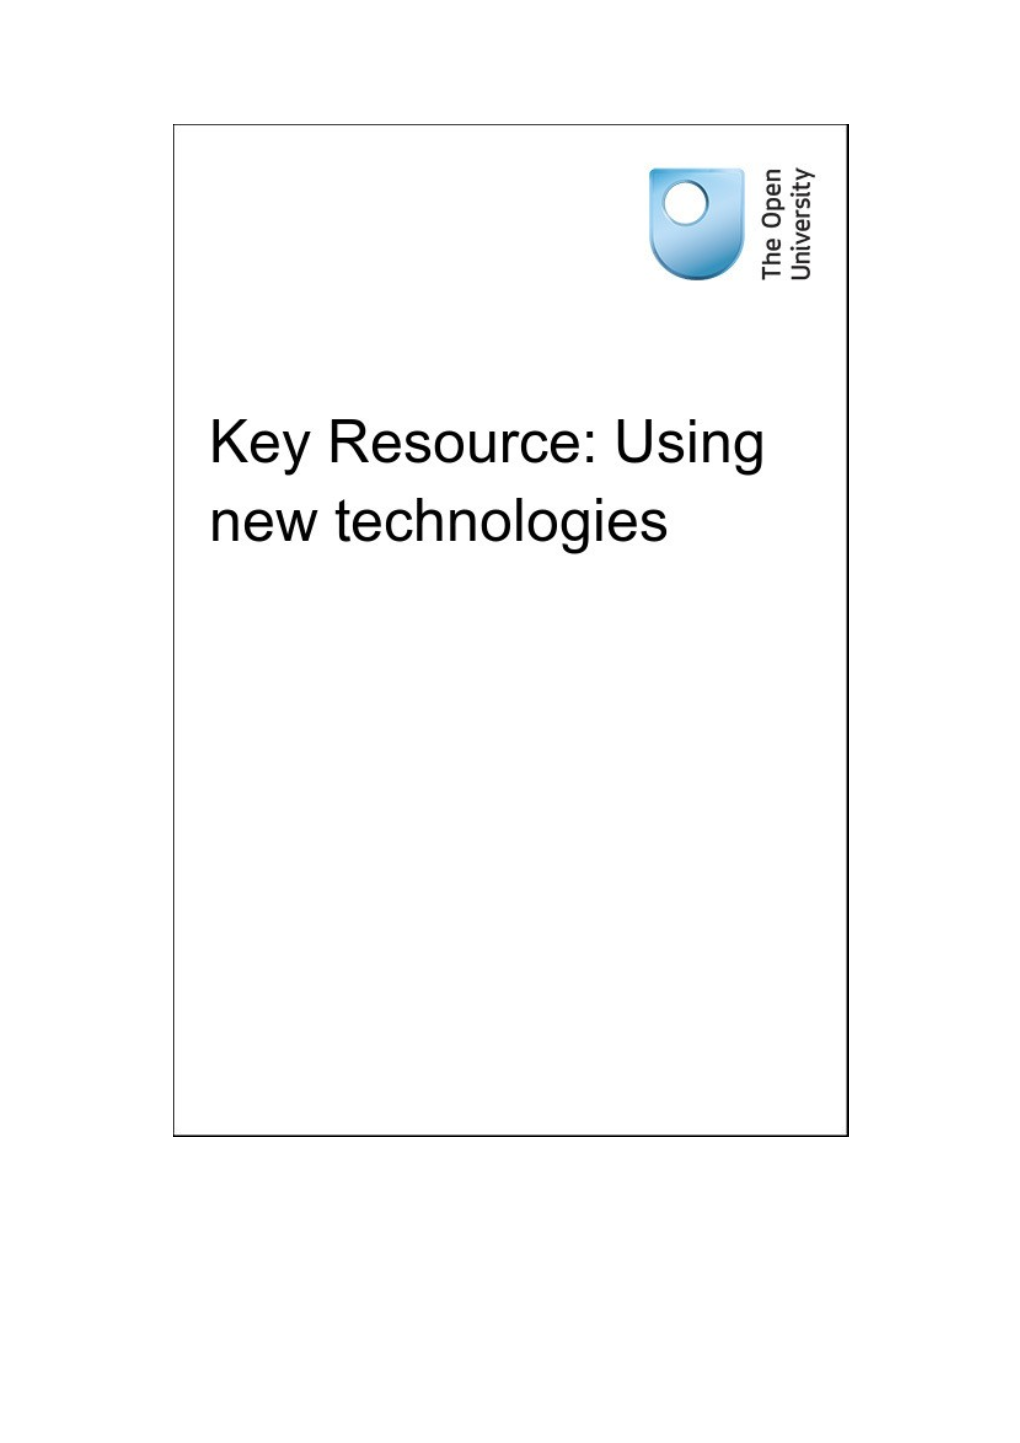 Key Resource: Using New Technologies